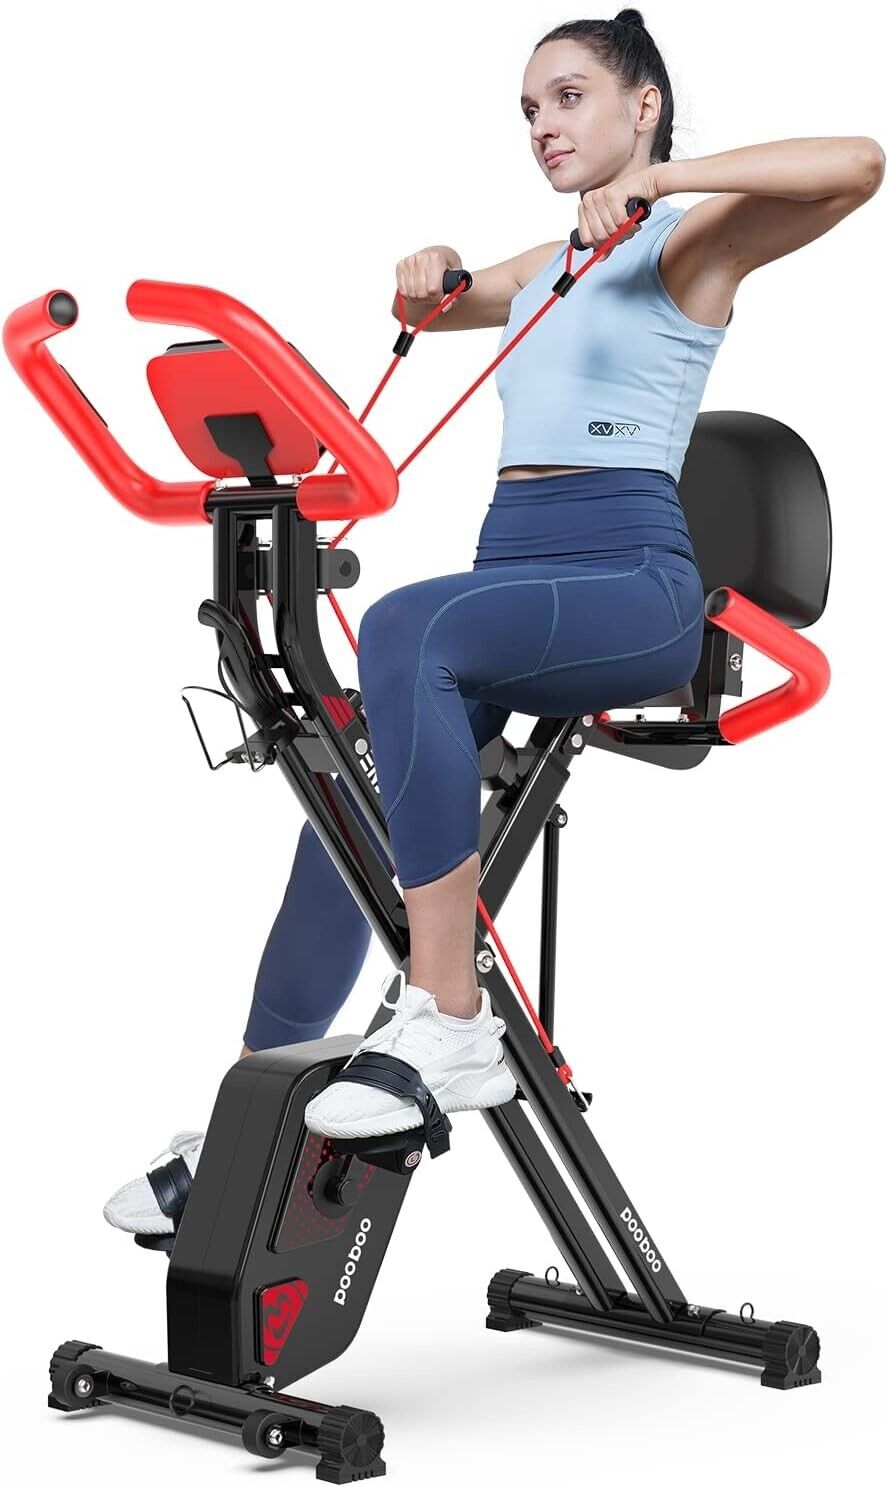 “Folding Magnetic Exercise Bike – 8-Level Resistance, Back Support, Home Gym Wor